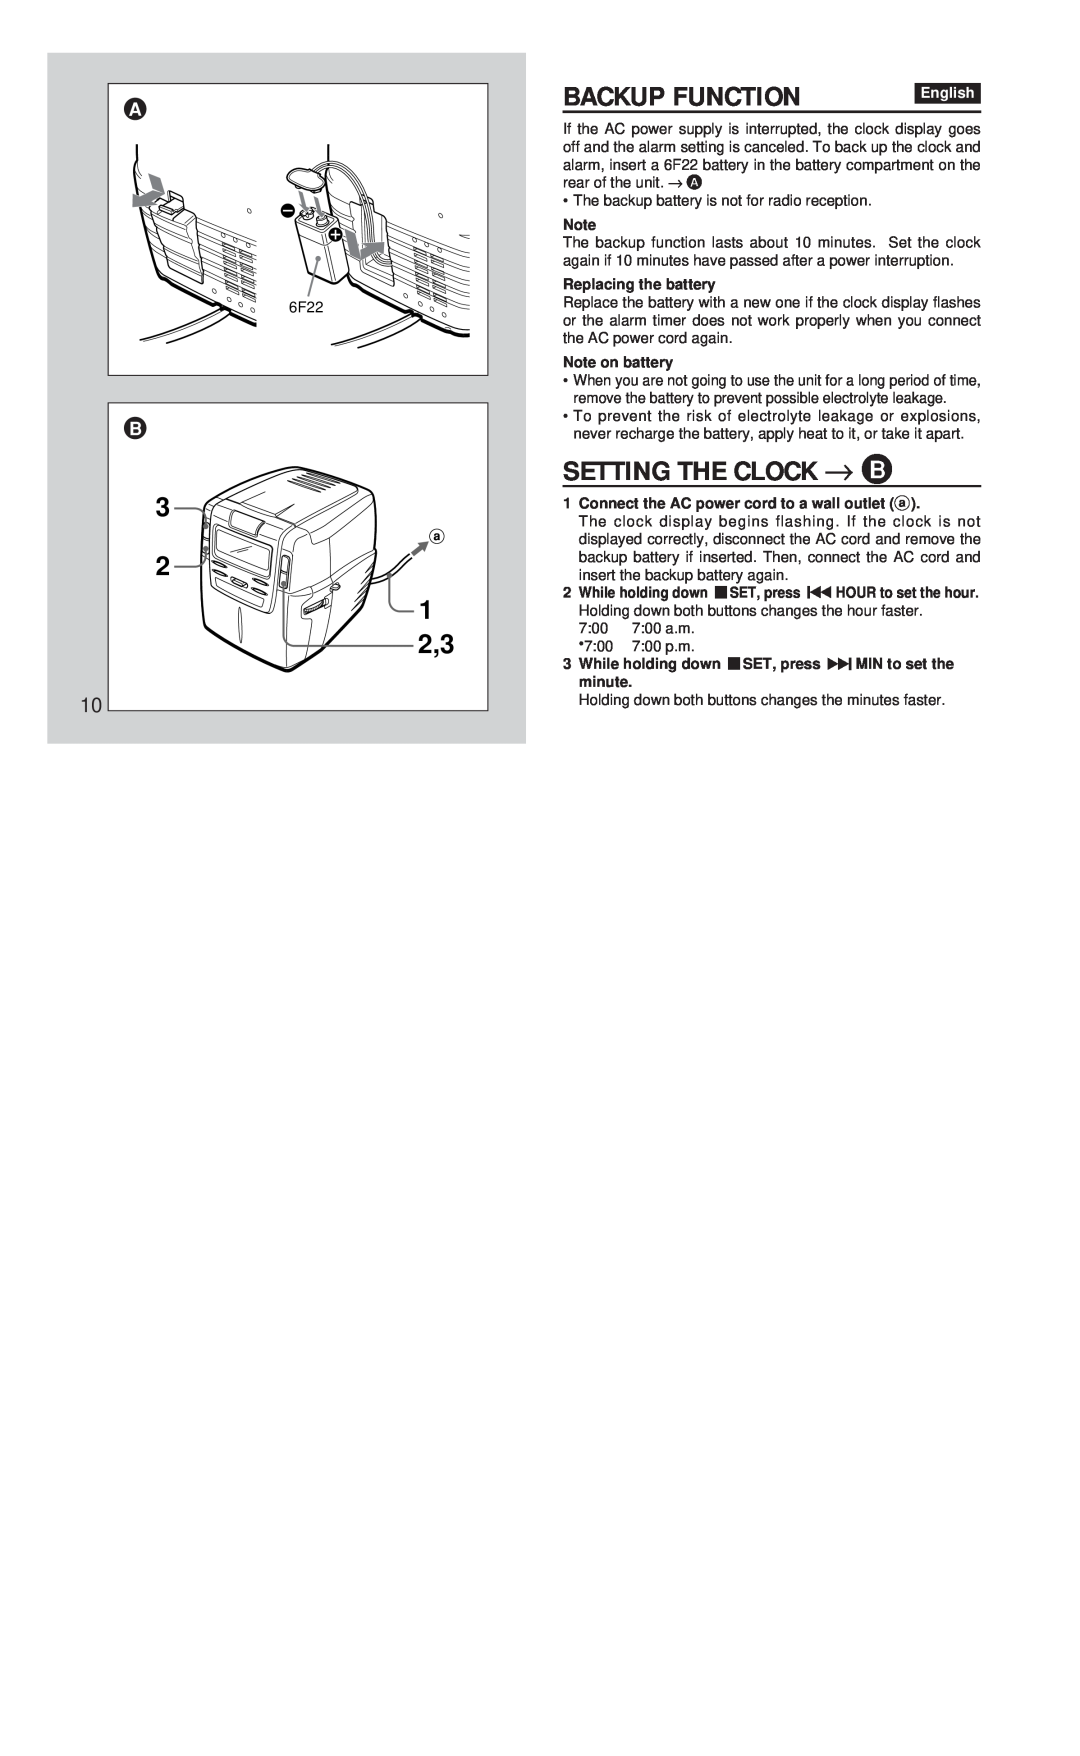 Aiwa FR-CD1500 manual Backup Function, Setting The Clock → B, 3 2 1 2,3 